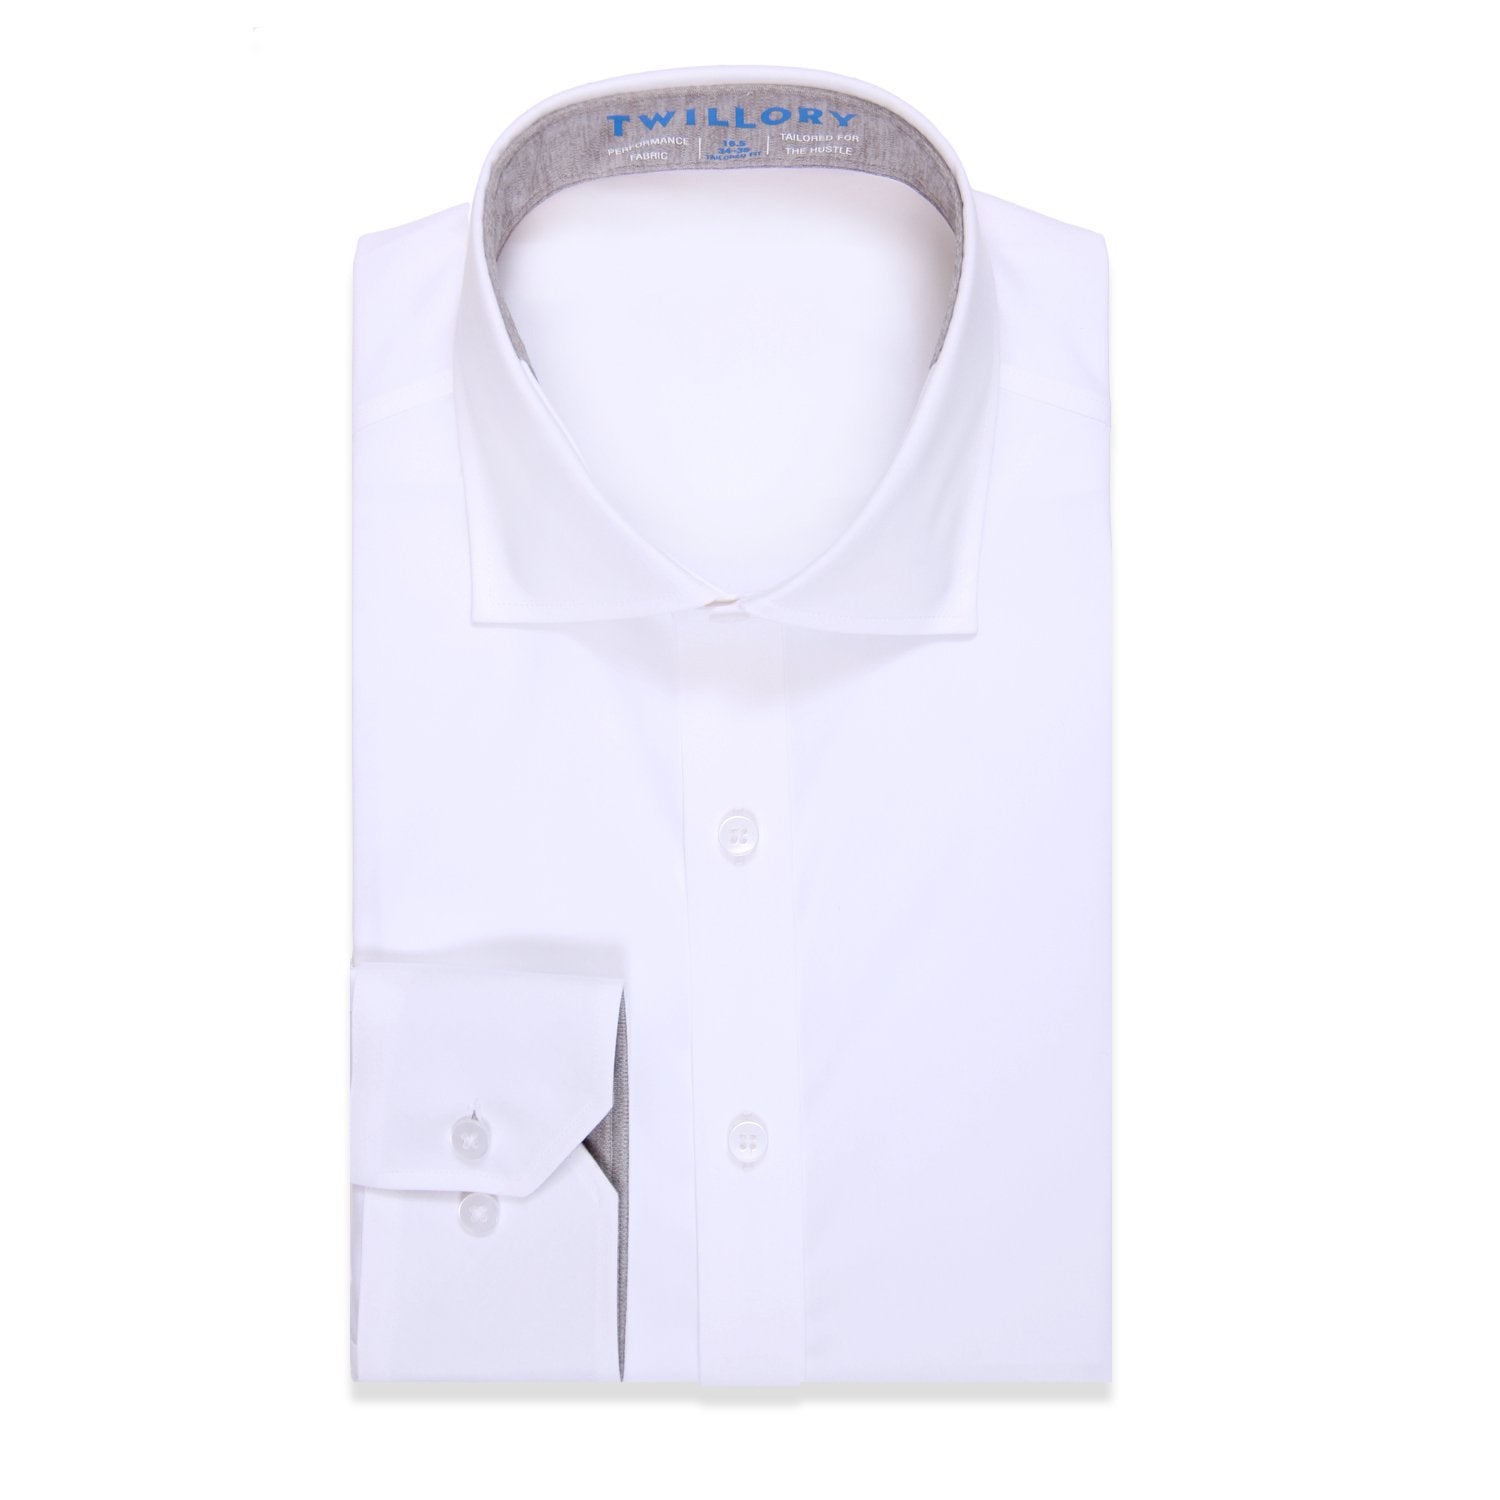 WUSI 36pcs Collar Stays for Men's Dress Shirts & Polos. Fashion